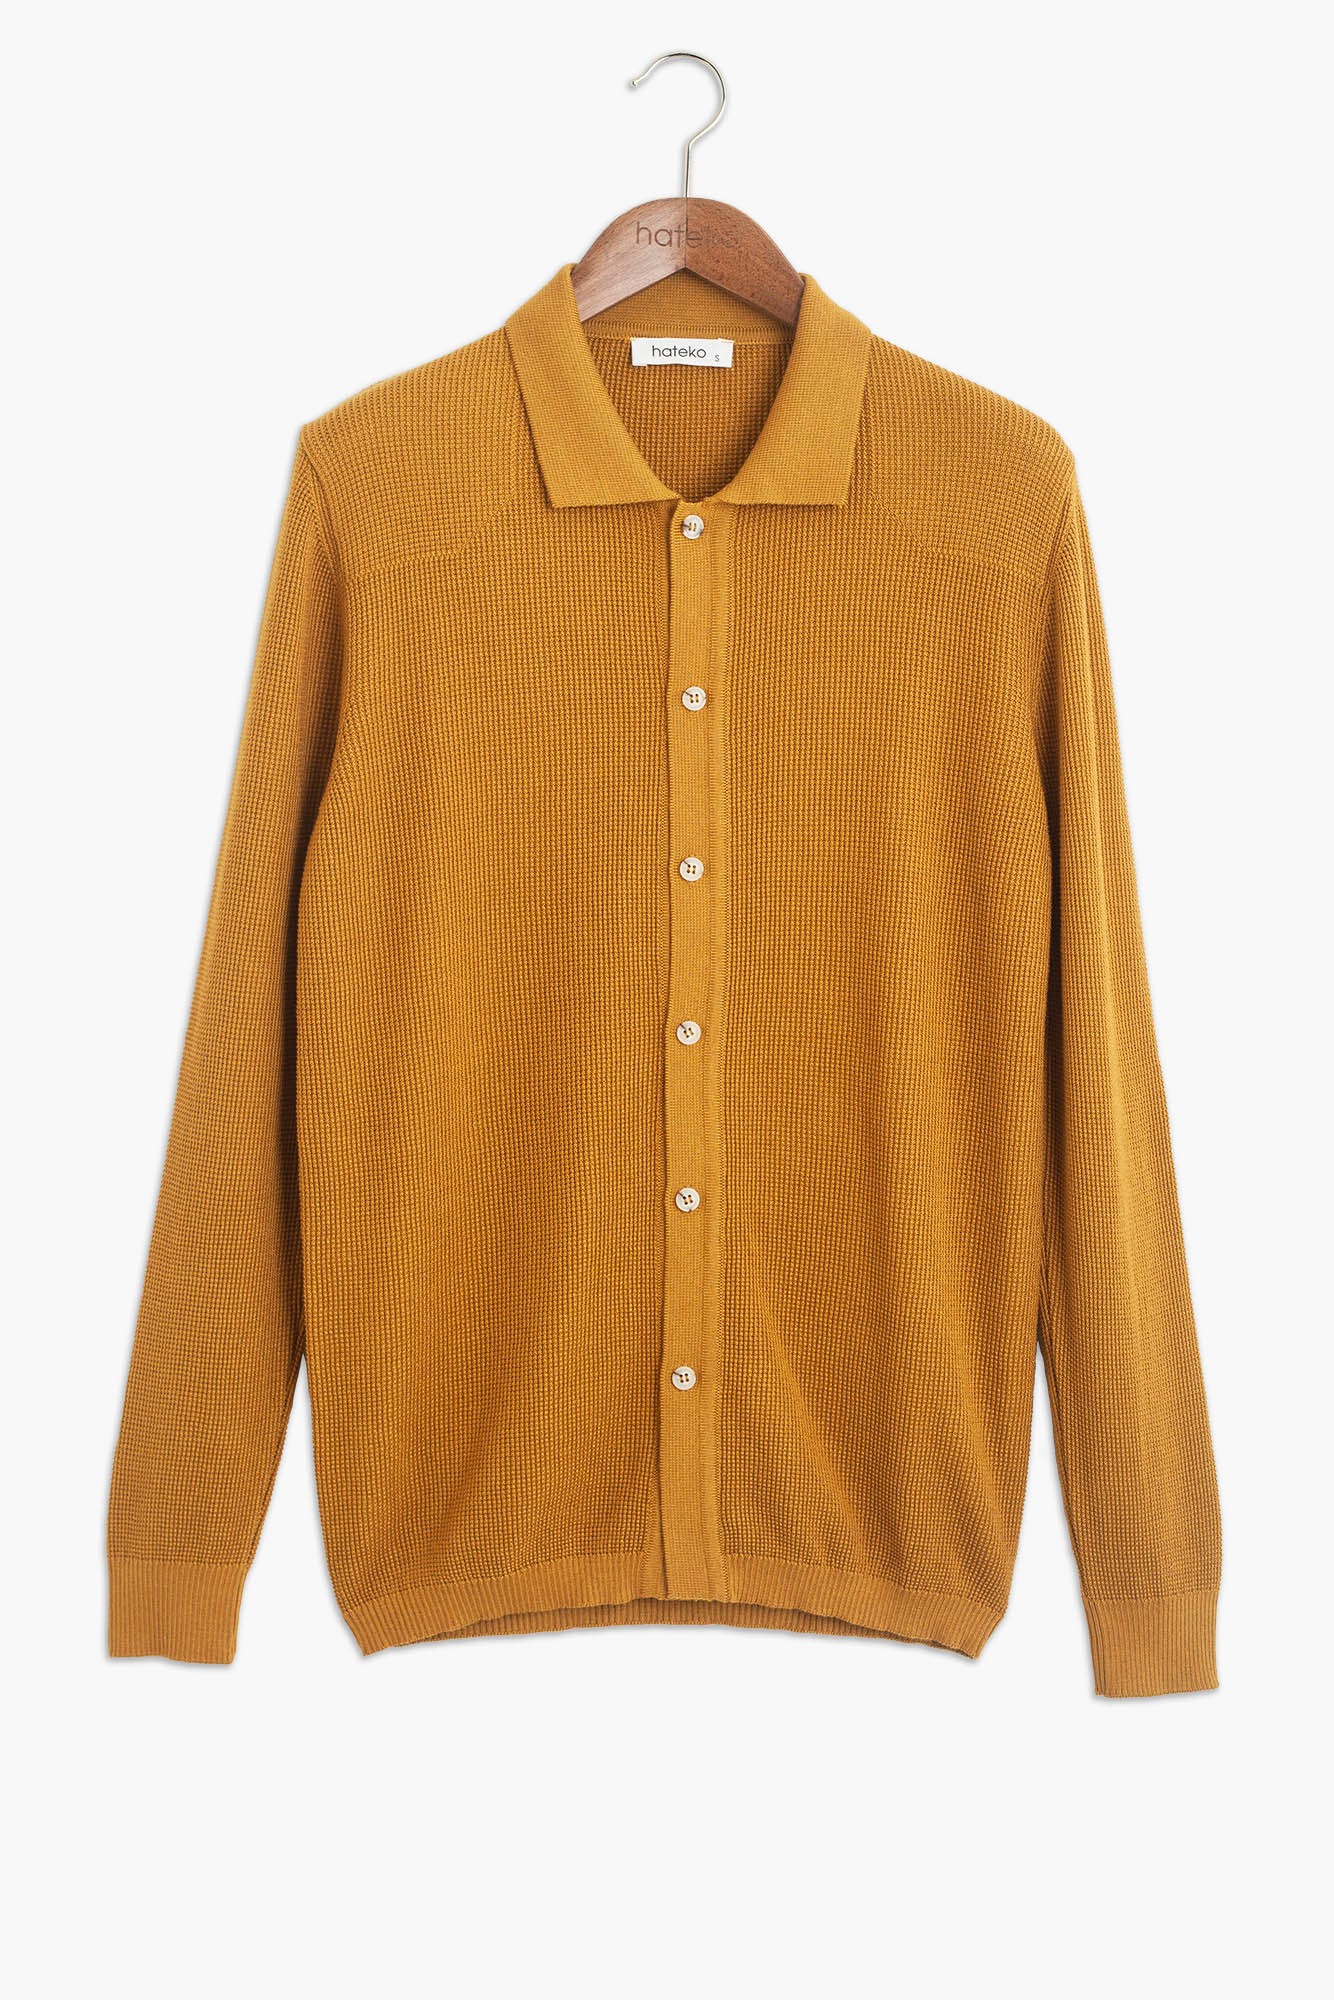 Cotton-Bamboo Shirt Knit Cardigan - Mustard